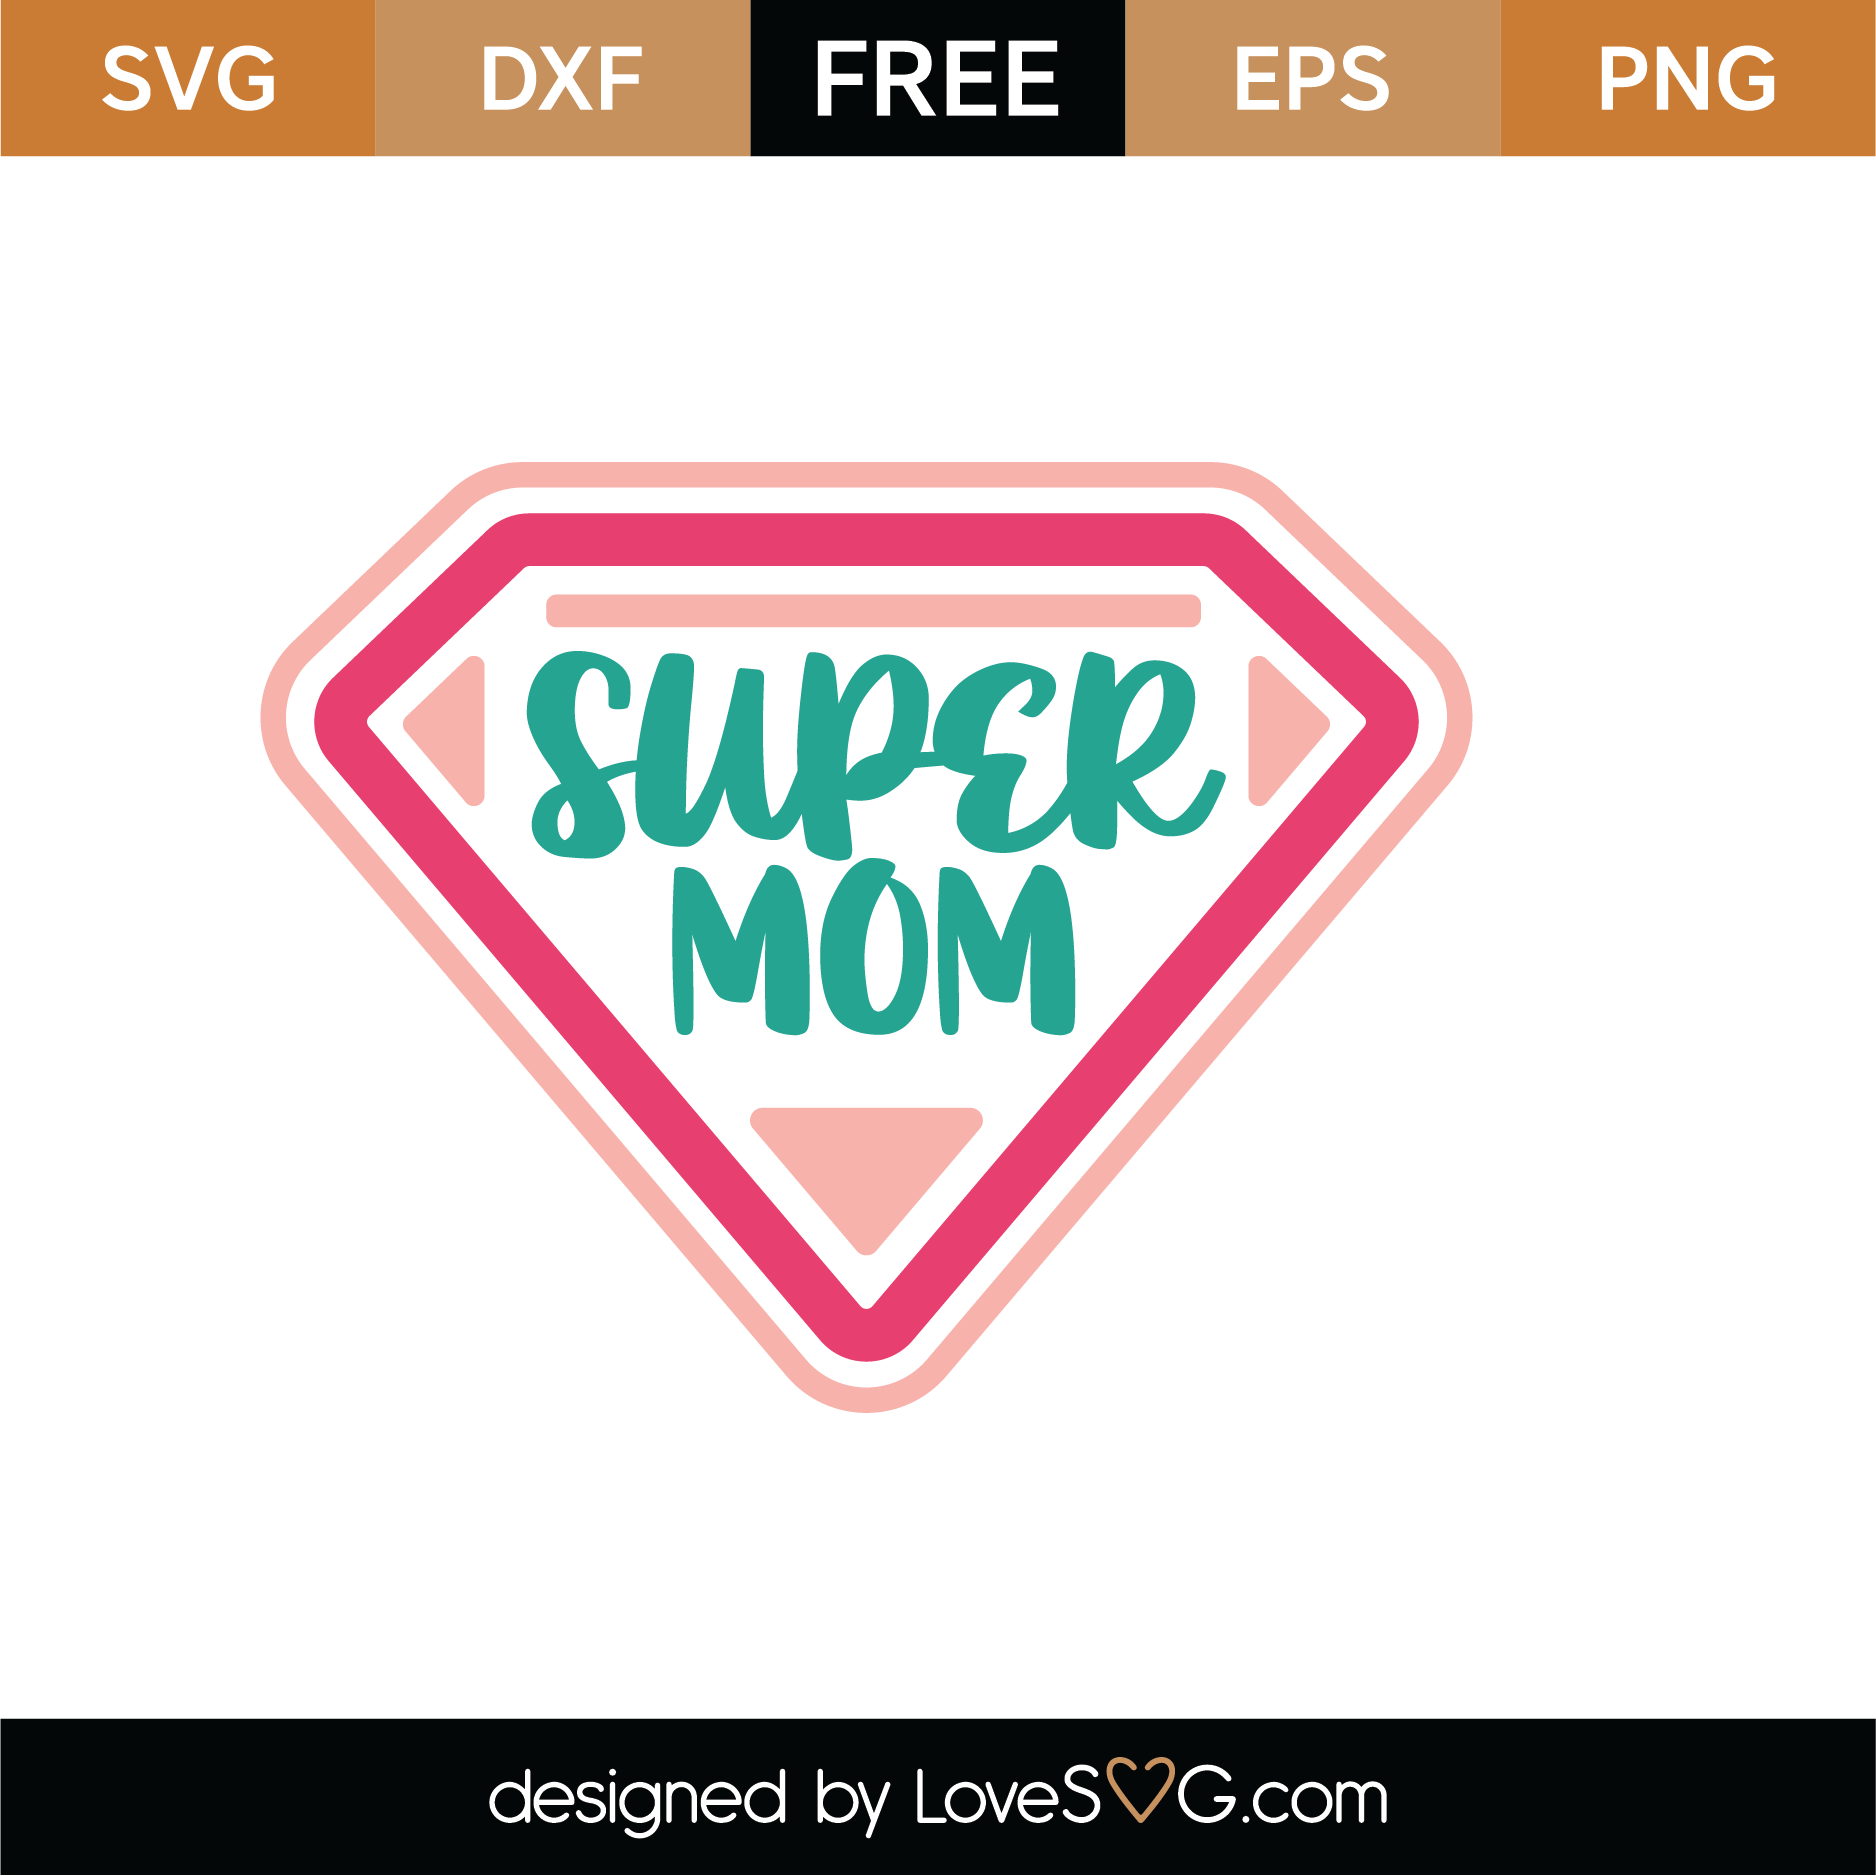 Download Free Super Mom SVG Cut File | Lovesvg.com